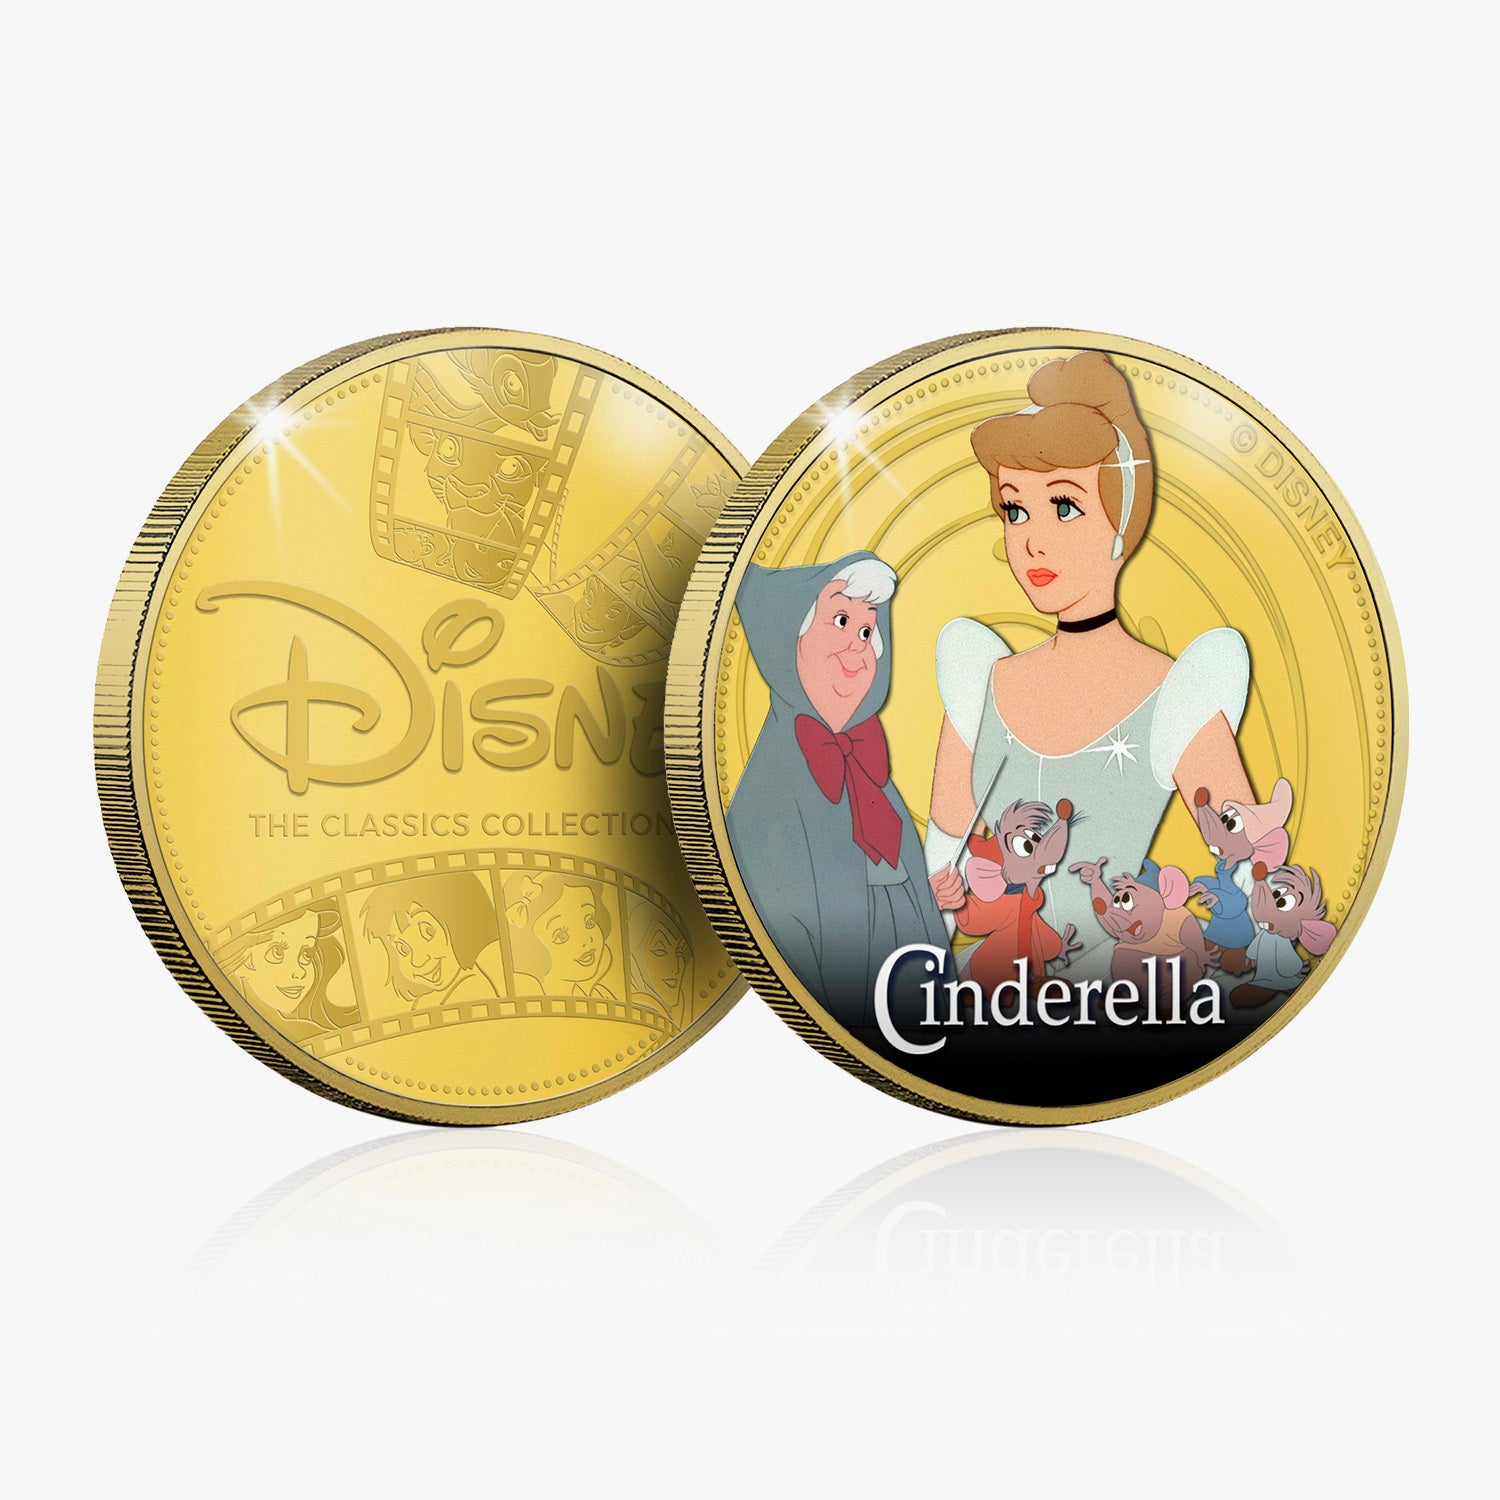 Cinderella Gold-Plated Commemorative